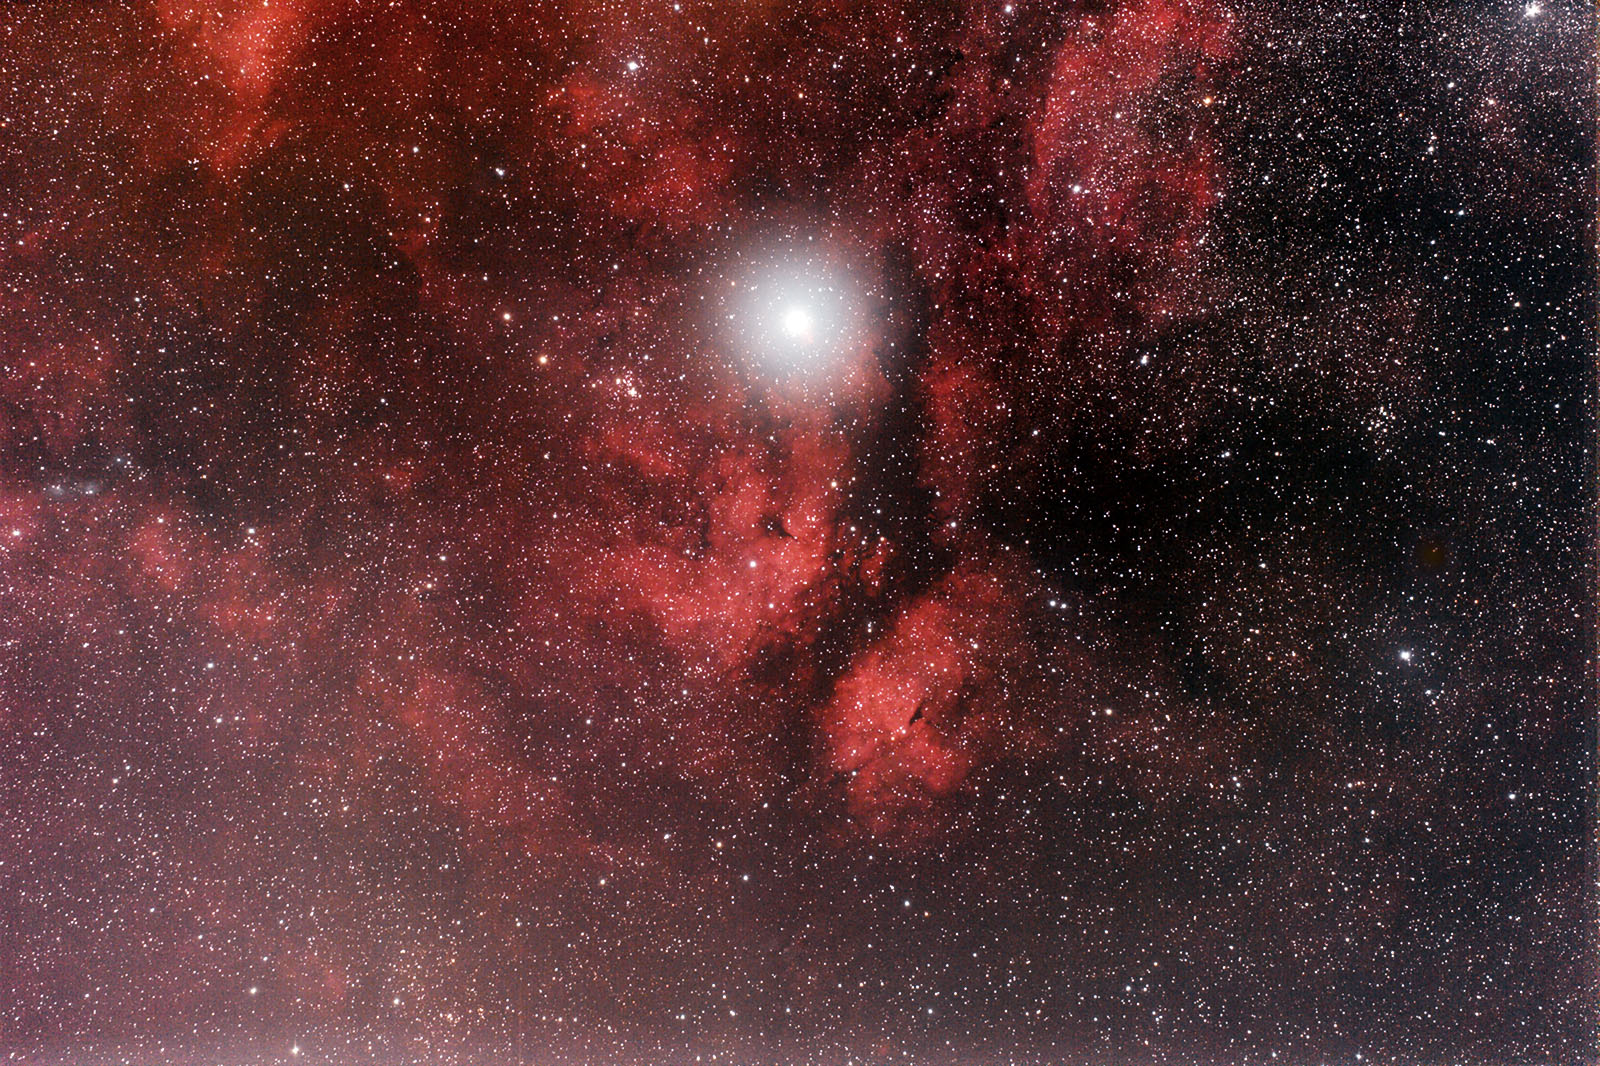 Gamma Cygni Nebula light_BINNING_1_integration_DBE_PS 1600_dust processed.jpg